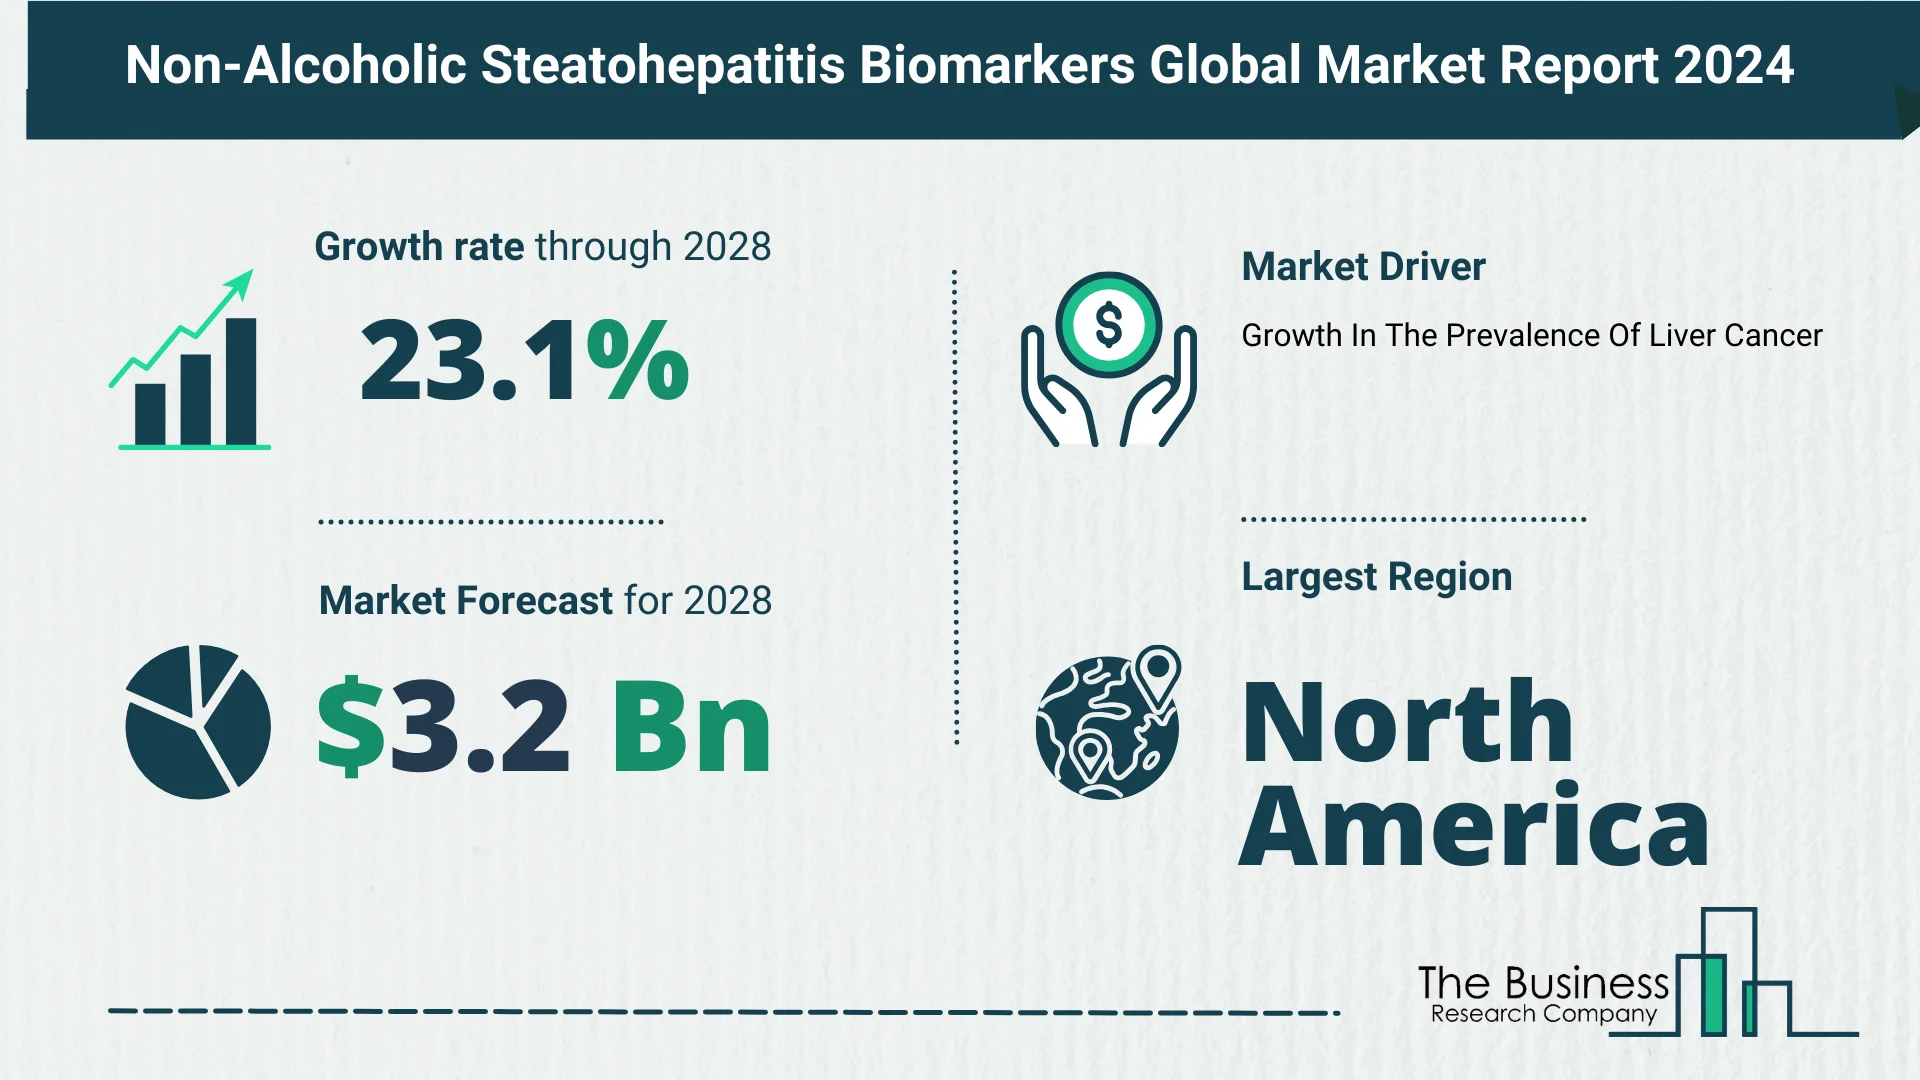 Global Non-Alcoholic Steatohepatitis Biomarkers Market Size